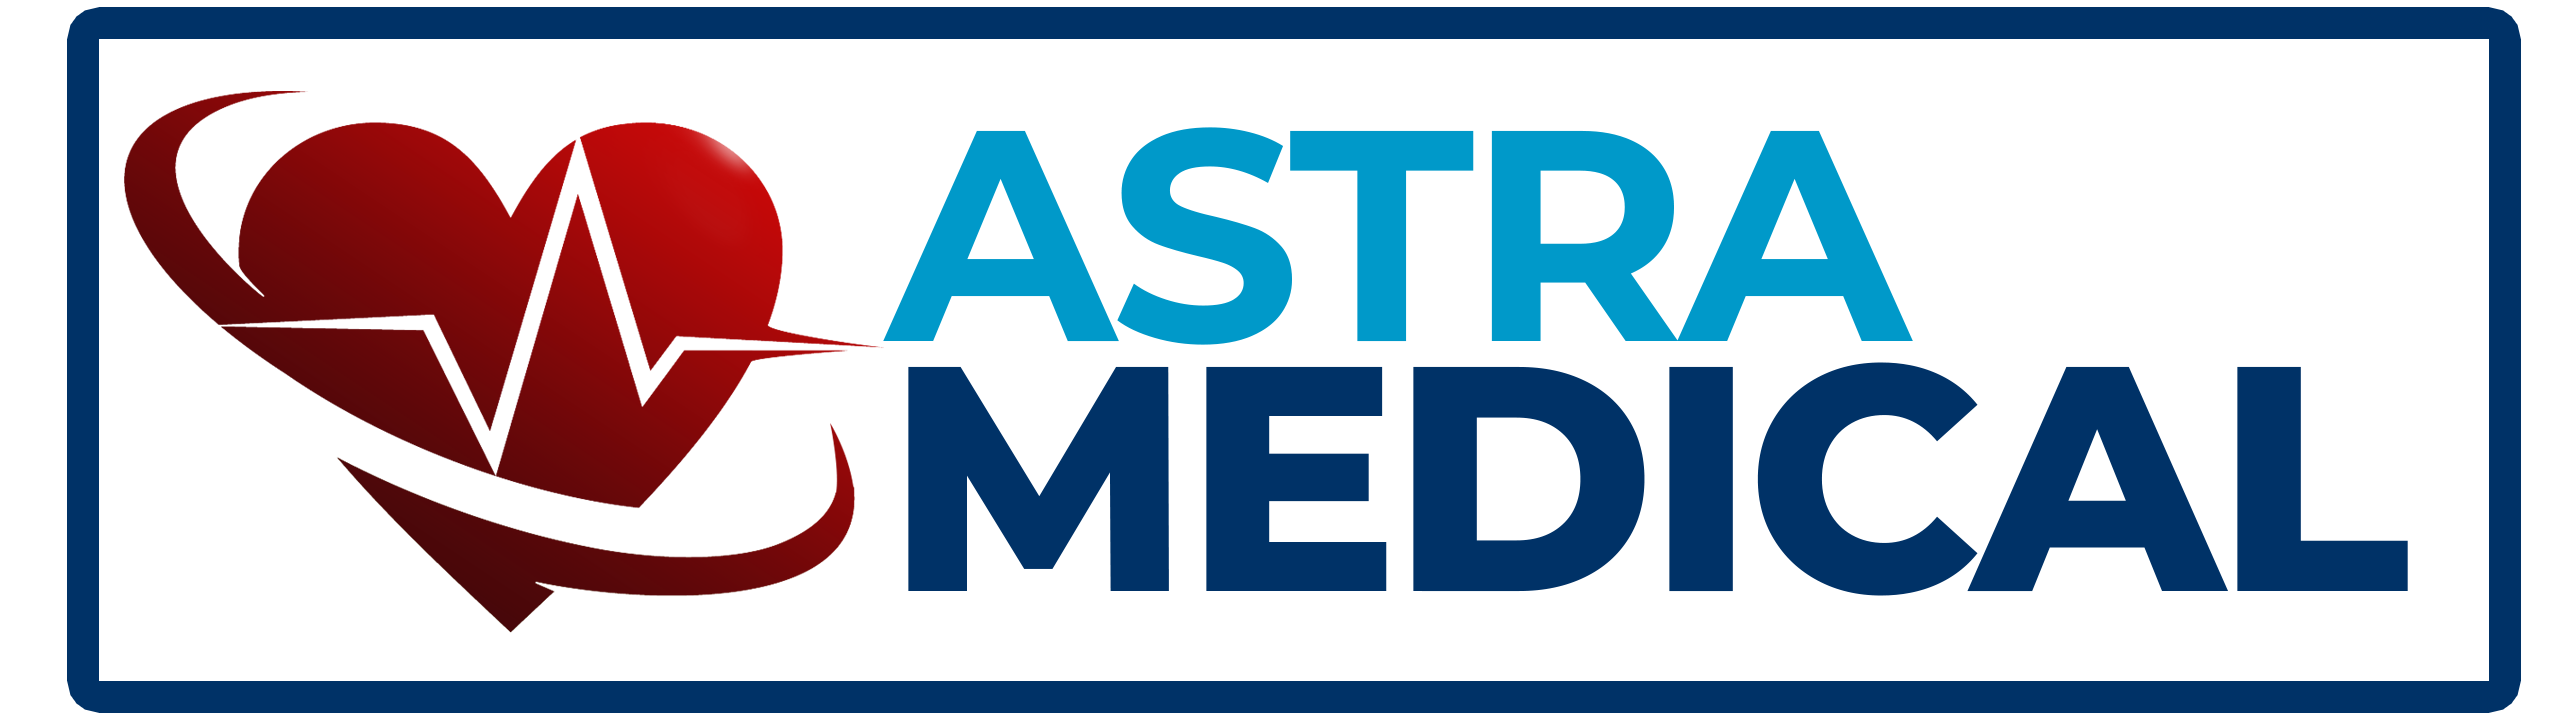 Astra Medical E.I.R.L.